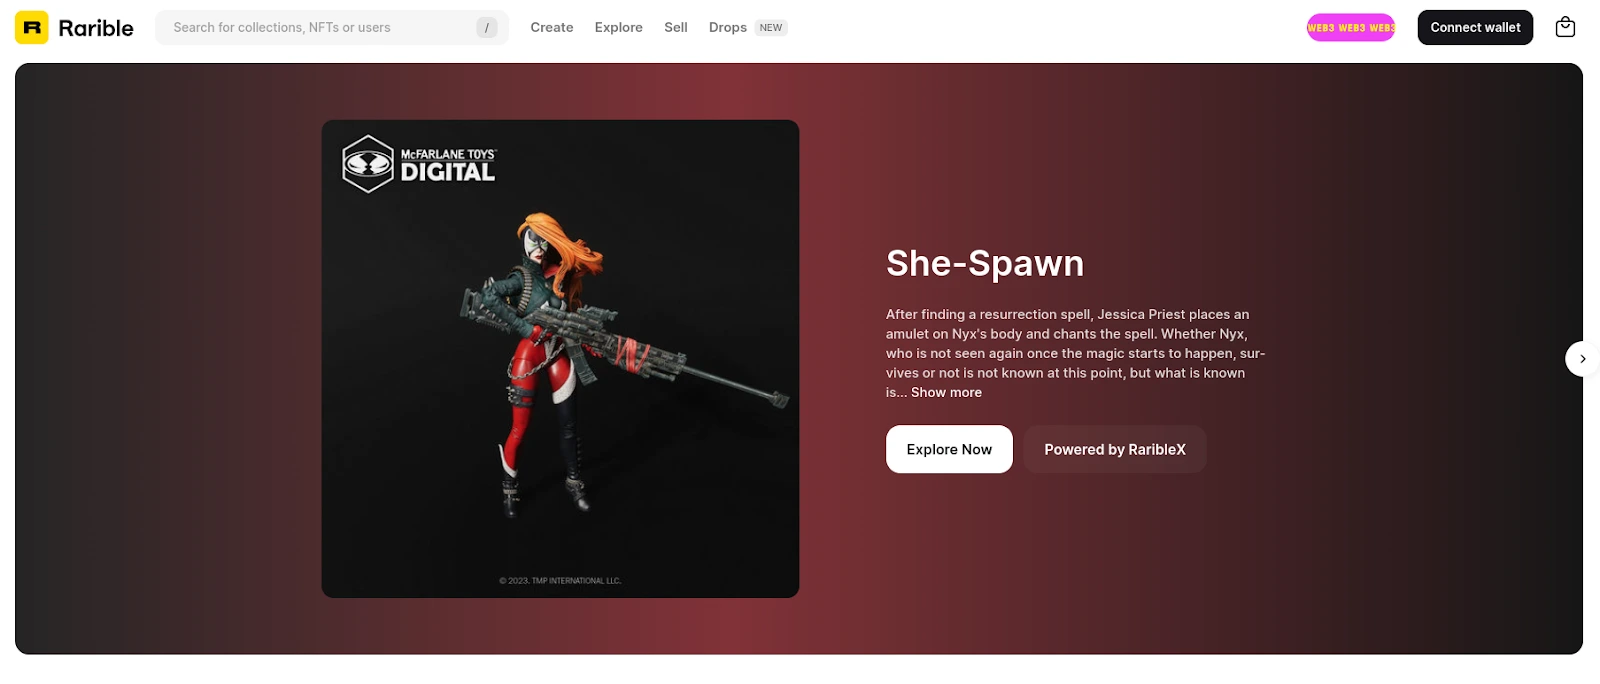 Rarible Landing Page showing “She-Spawn” NFT